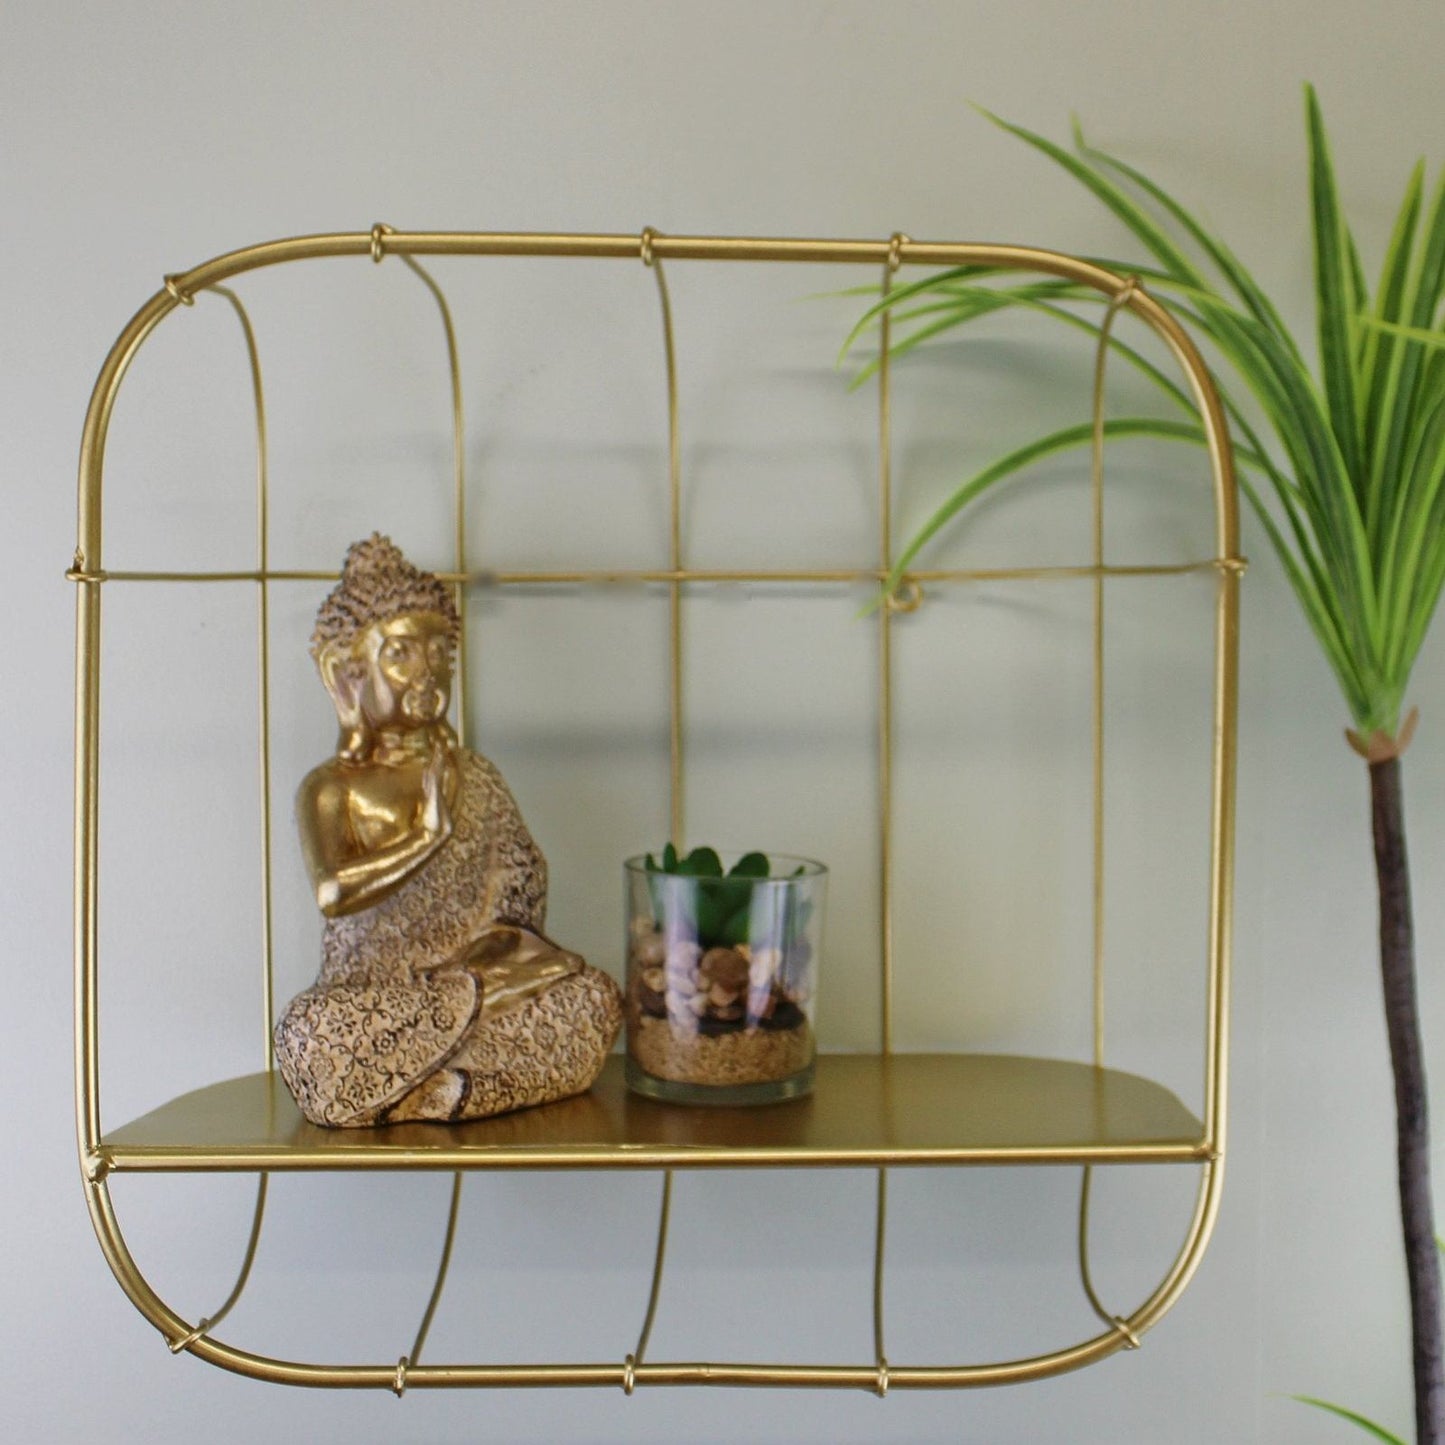 Gold Metal Wall Storage Shelf, Basket Design - Ashton and Finch